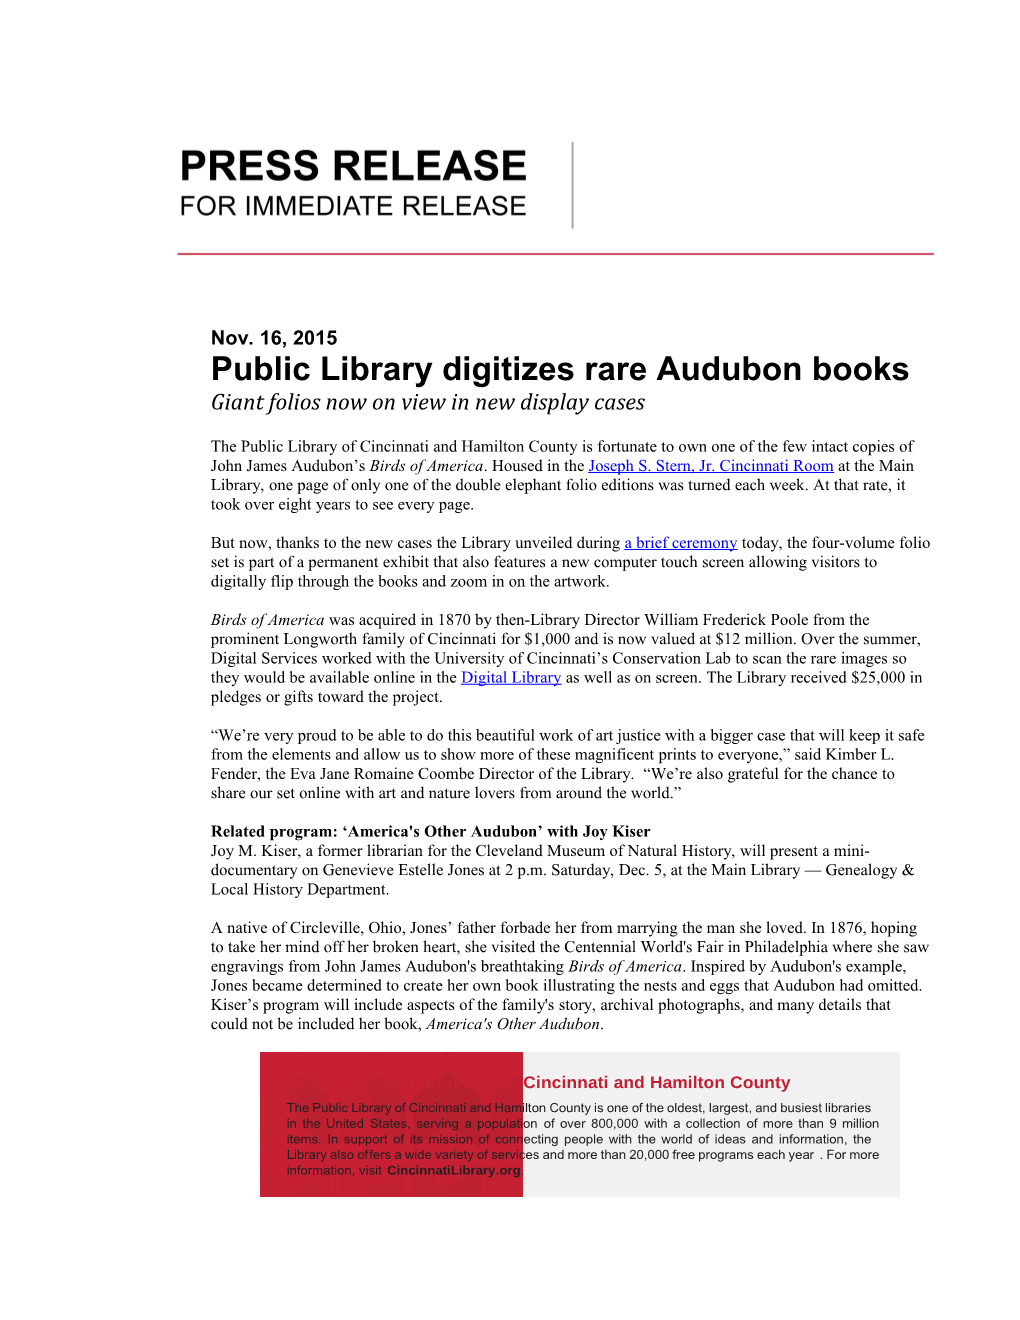 Public Library Digitizes Rare Audubon Books